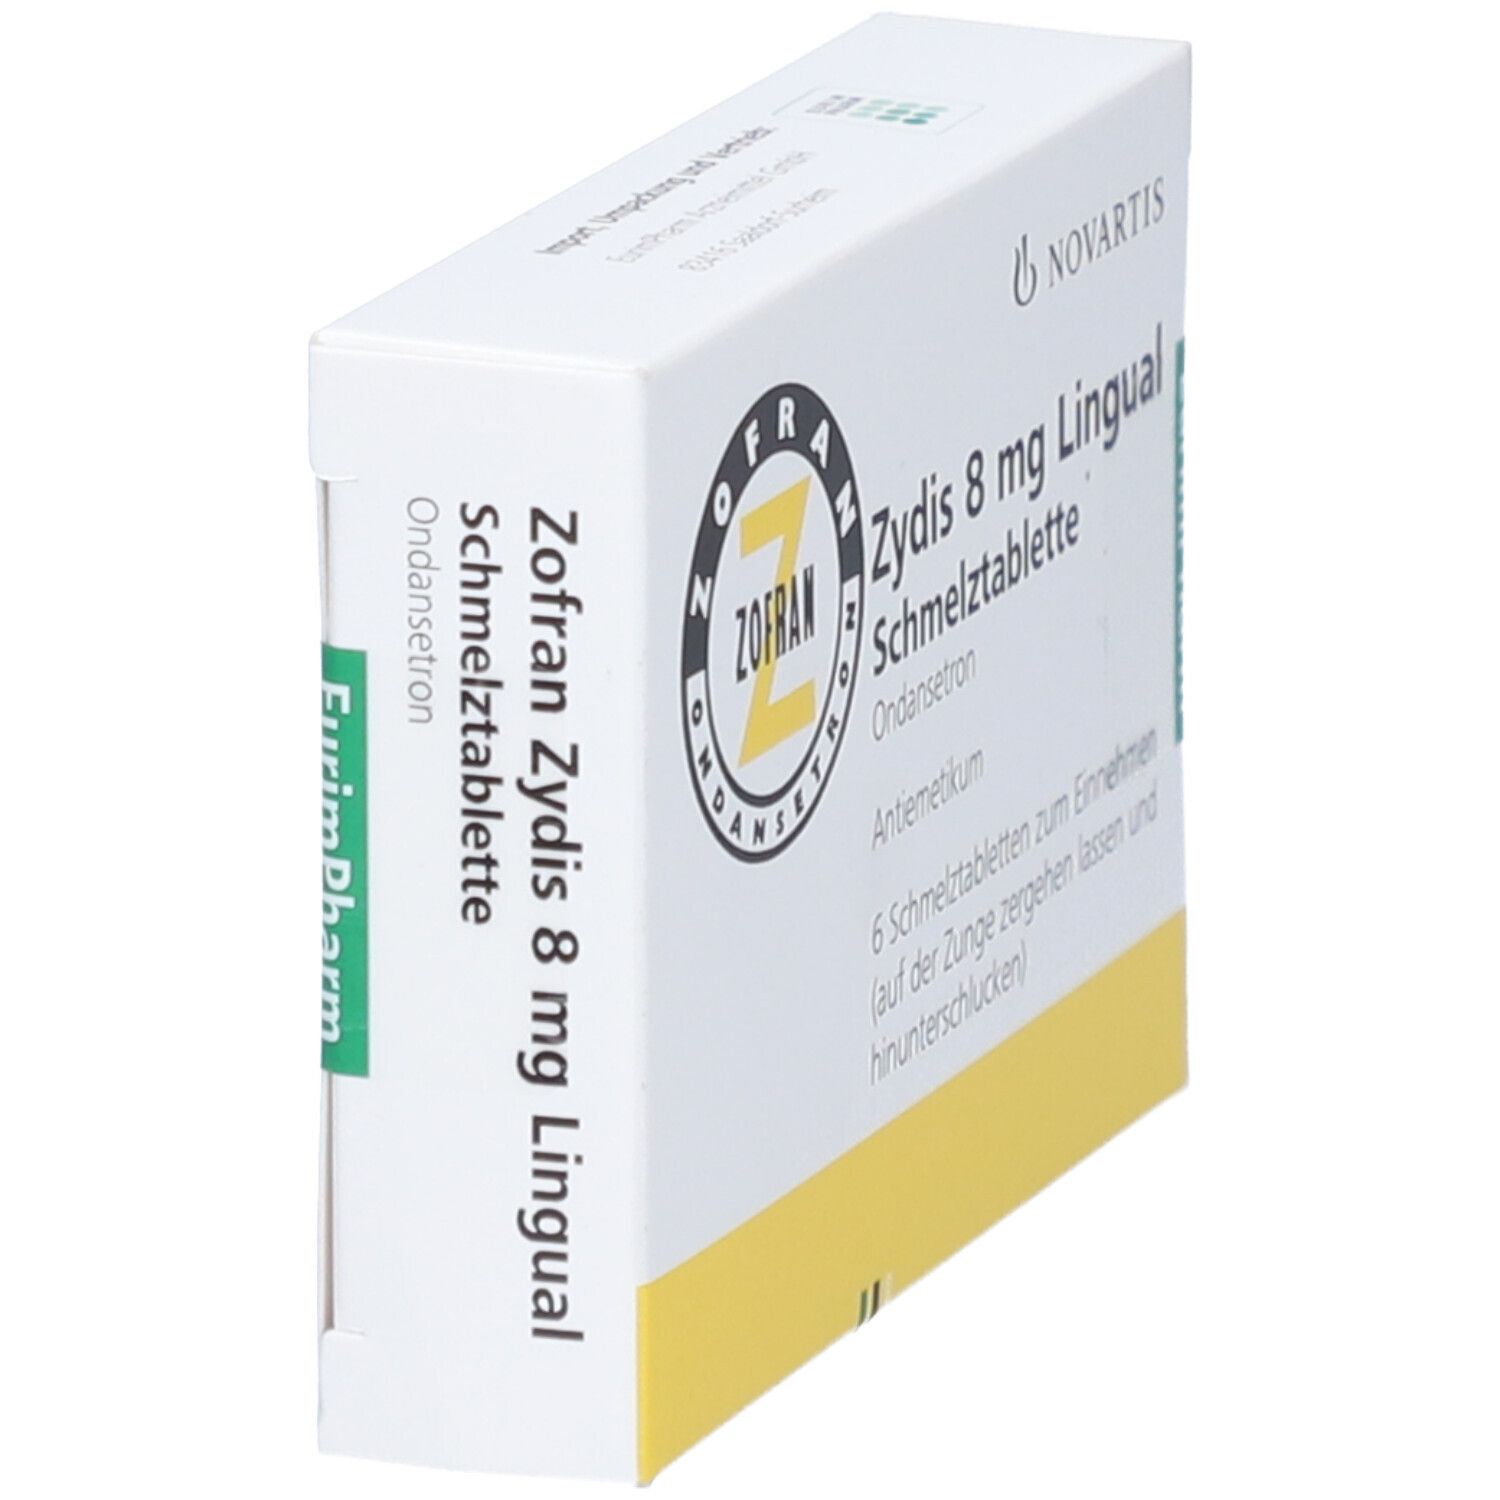 ZOFRAN 8 mg Zydis Lingual Schmelztabletten